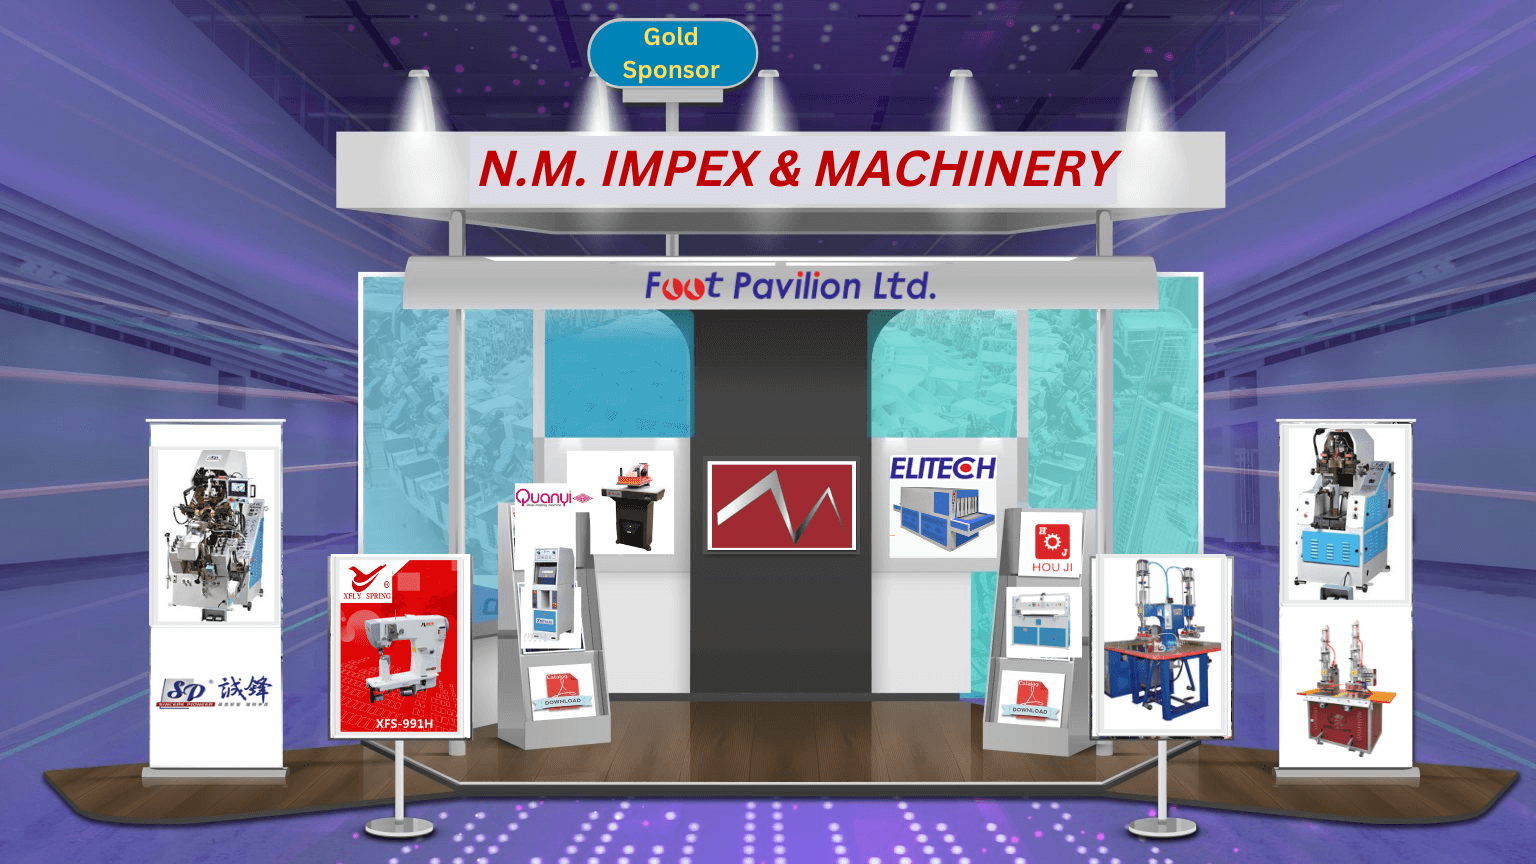 N.M. IMPEX & MACHINERY